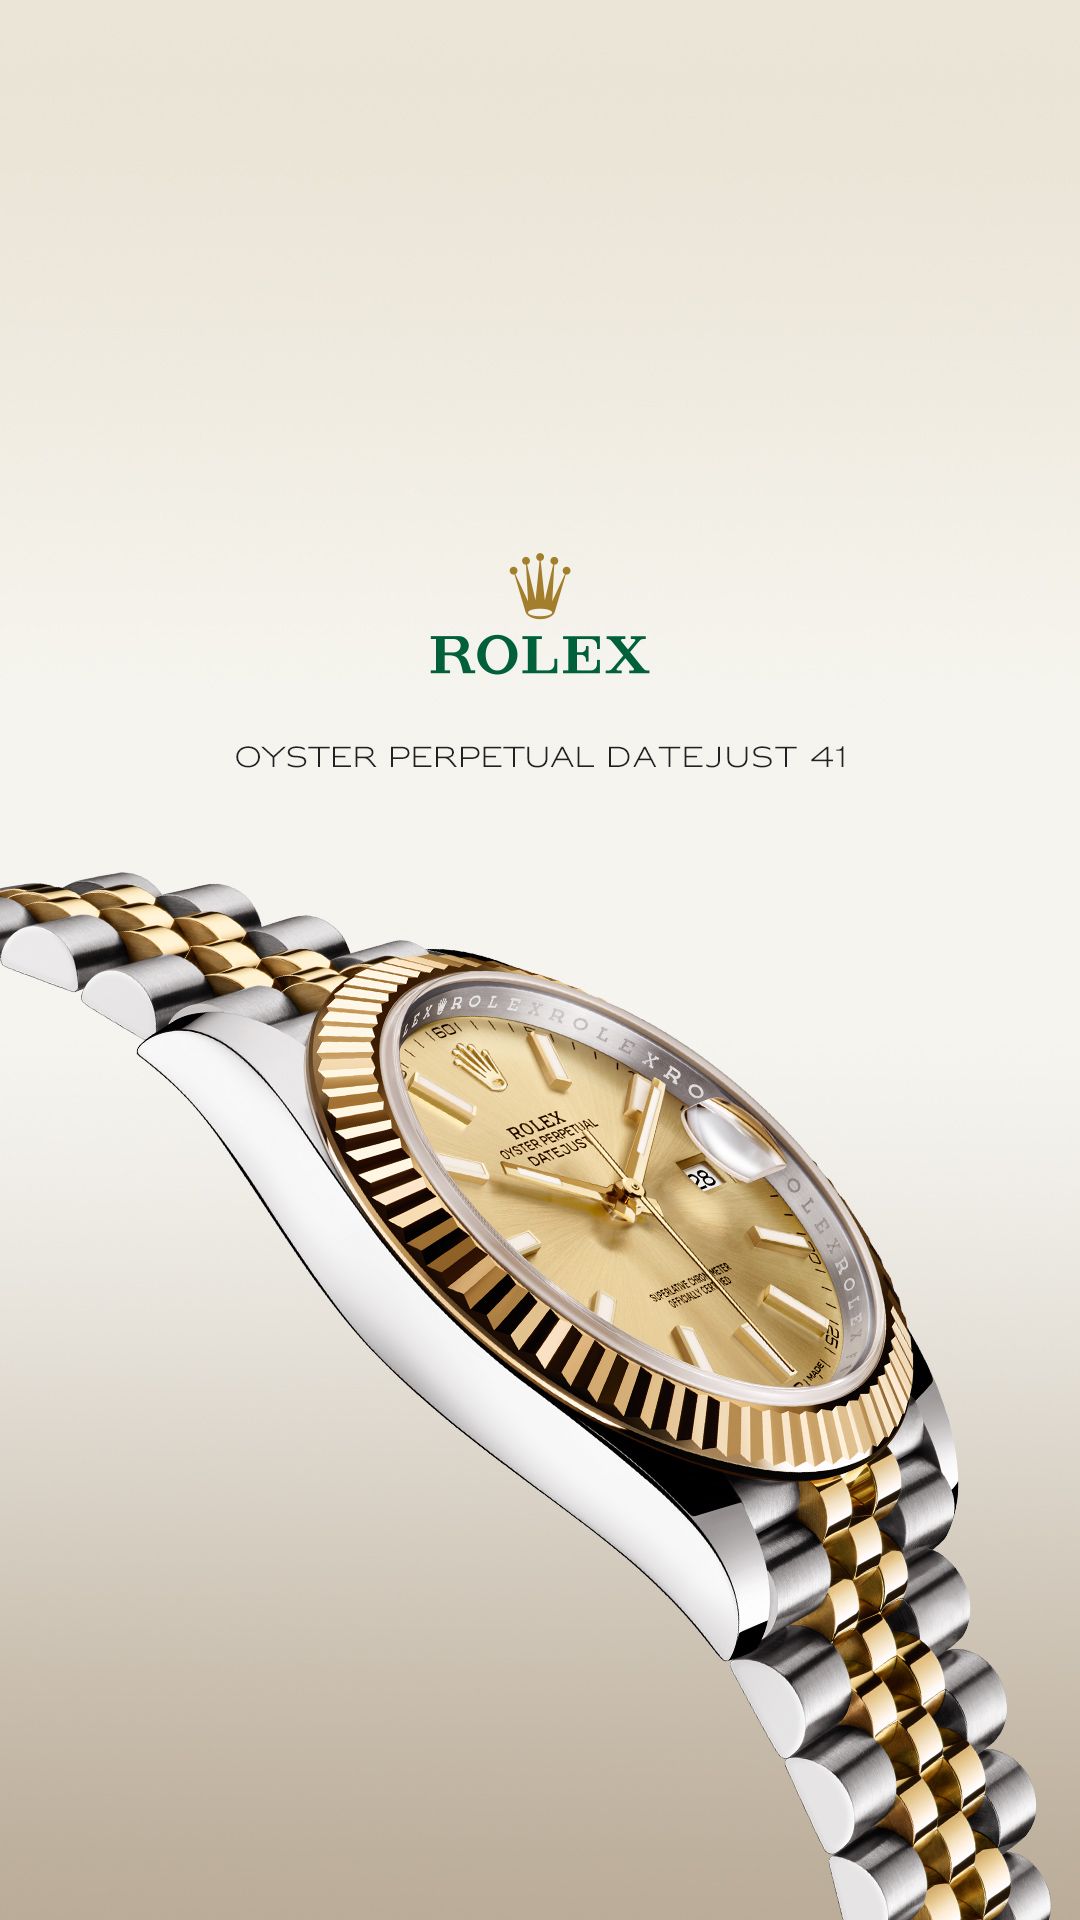 Download wallpaper of Rolex watches. #Rolex #Datejust #wallpaper. Rolex watches, Rolex watches women, Rolex